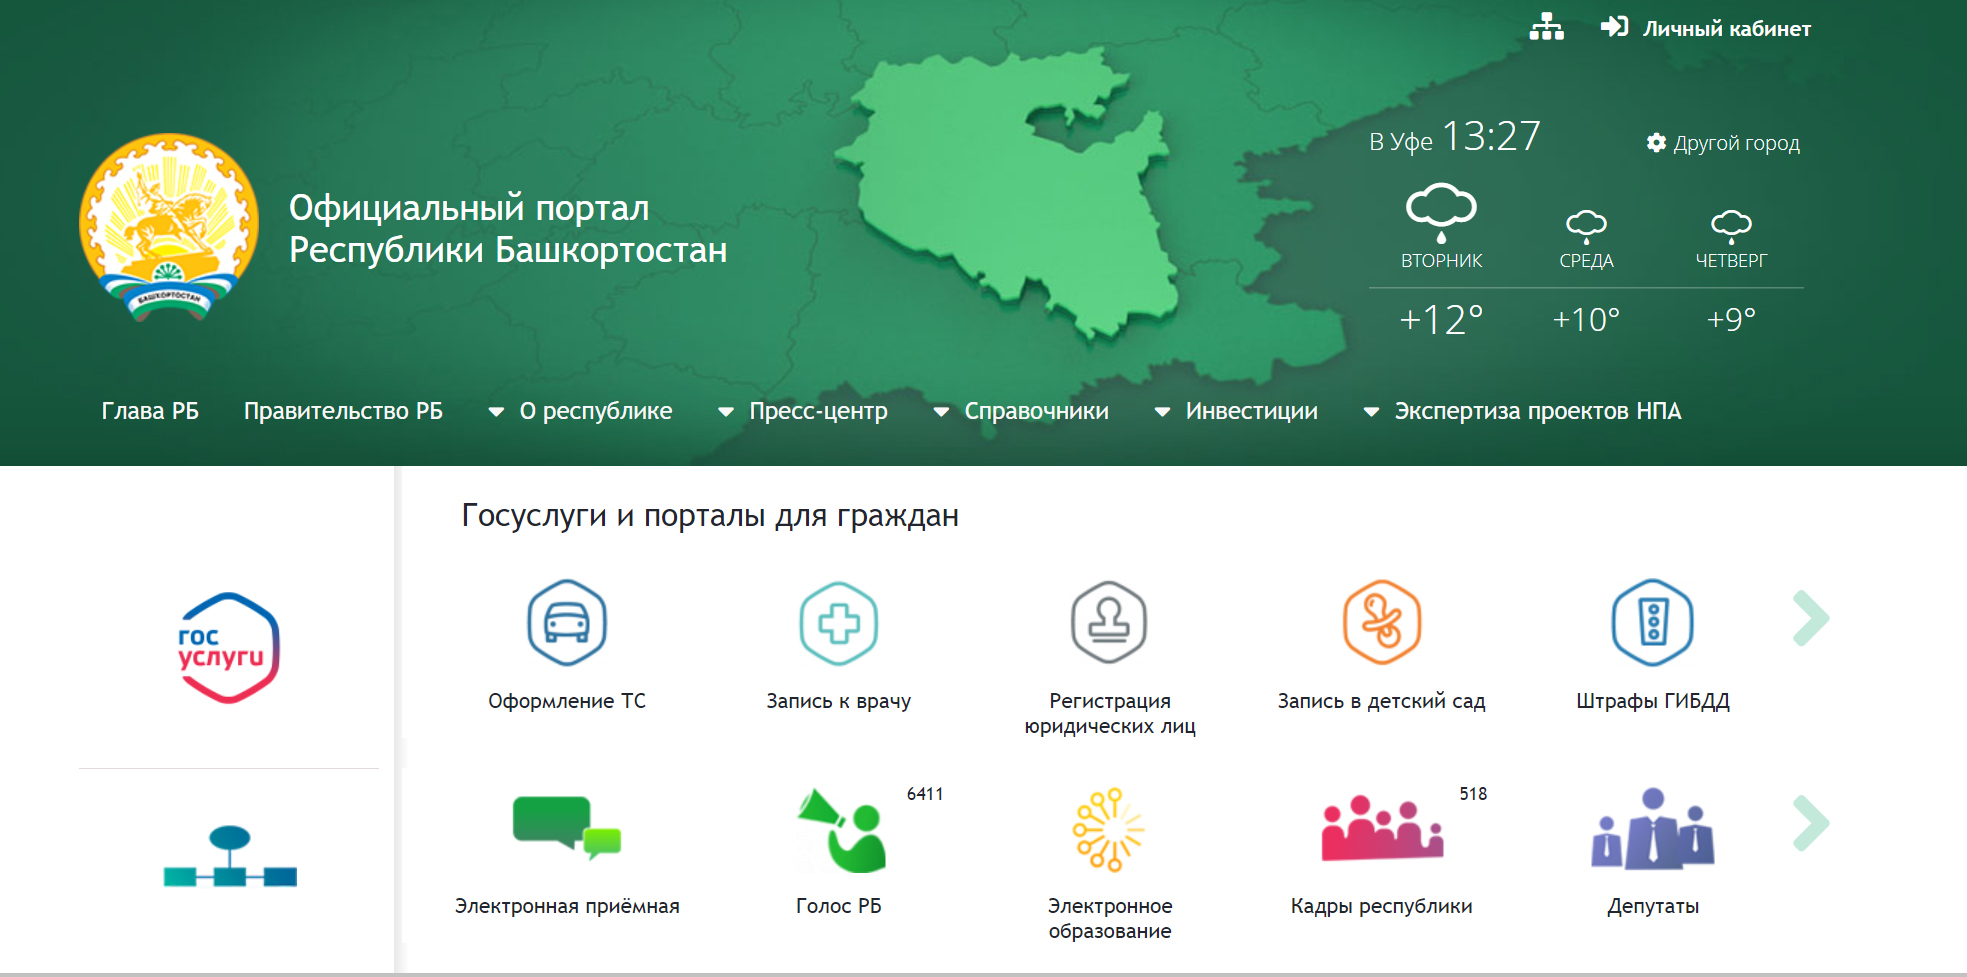 Сайт рб 1. Exchange.Bashkortostan.ru.